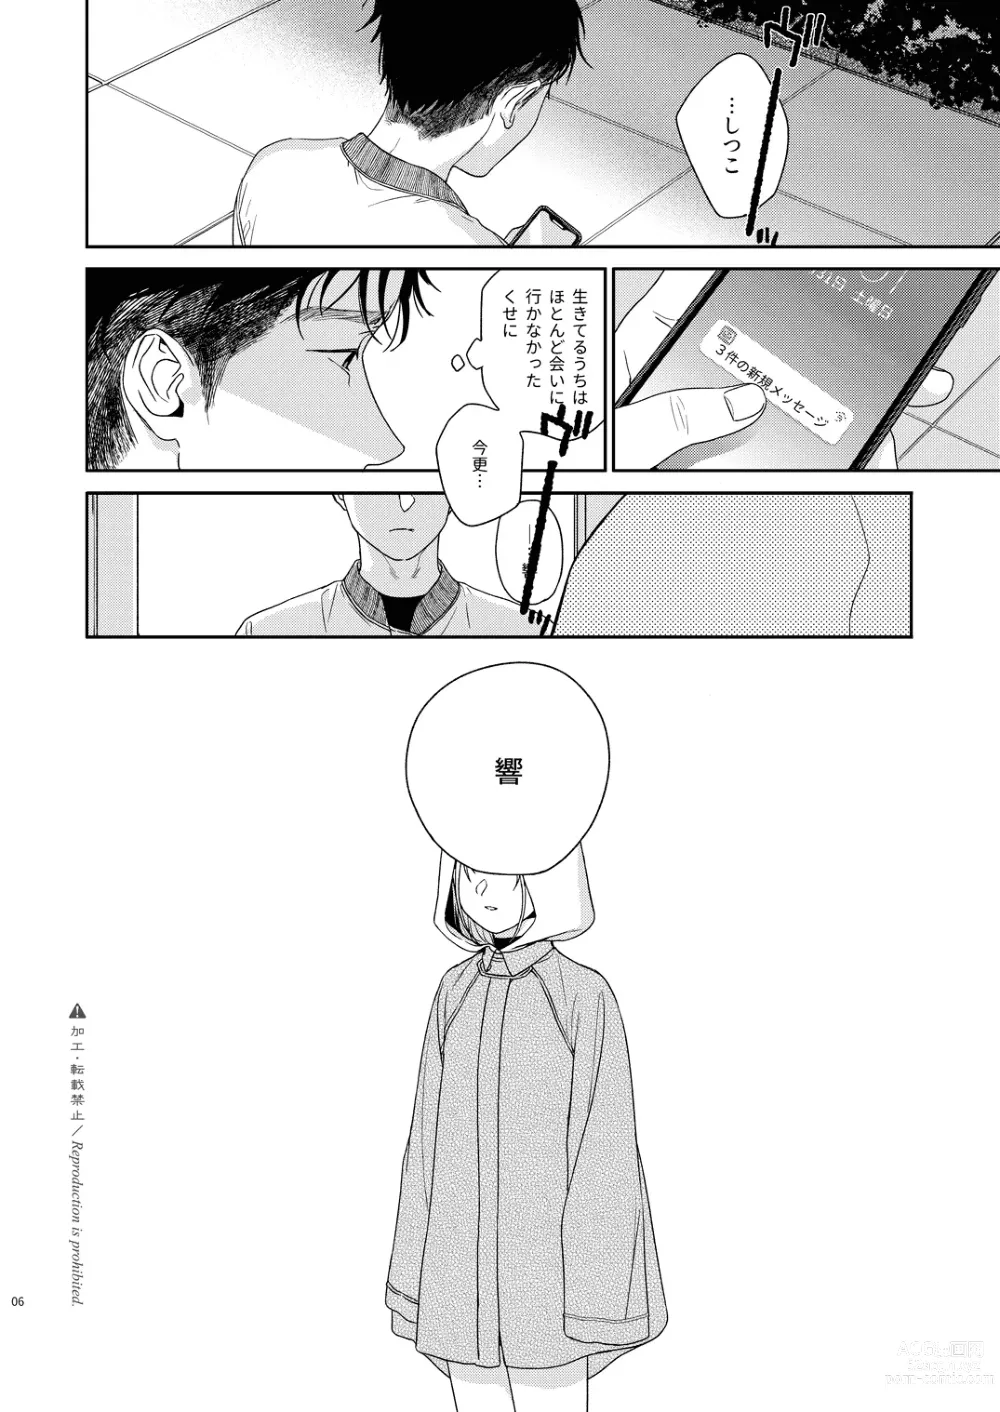 Page 7 of doujinshi Katami to Getsumei